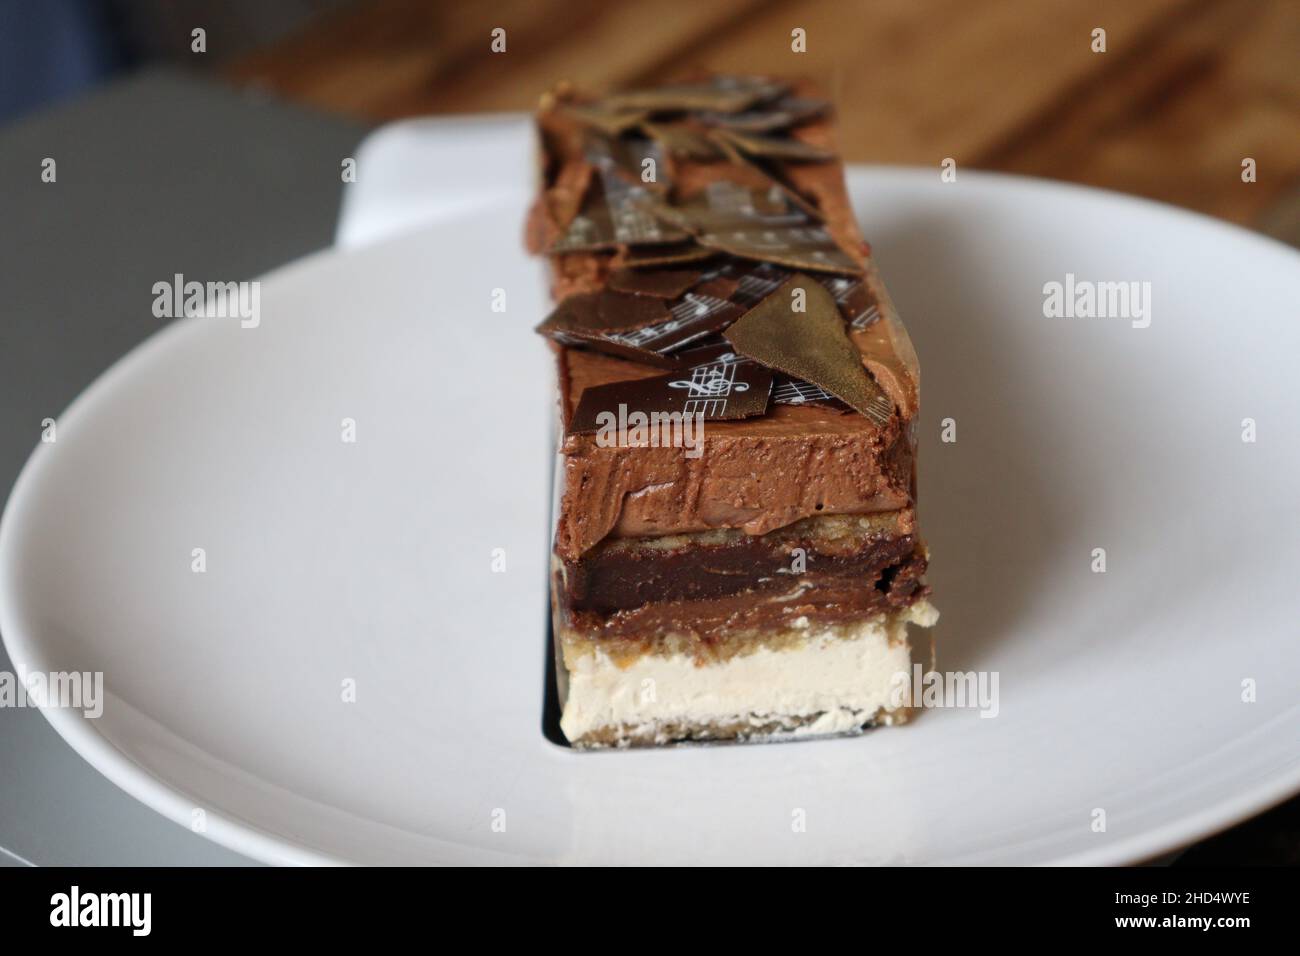 A chocolate opera cake style dessert Stock Photo